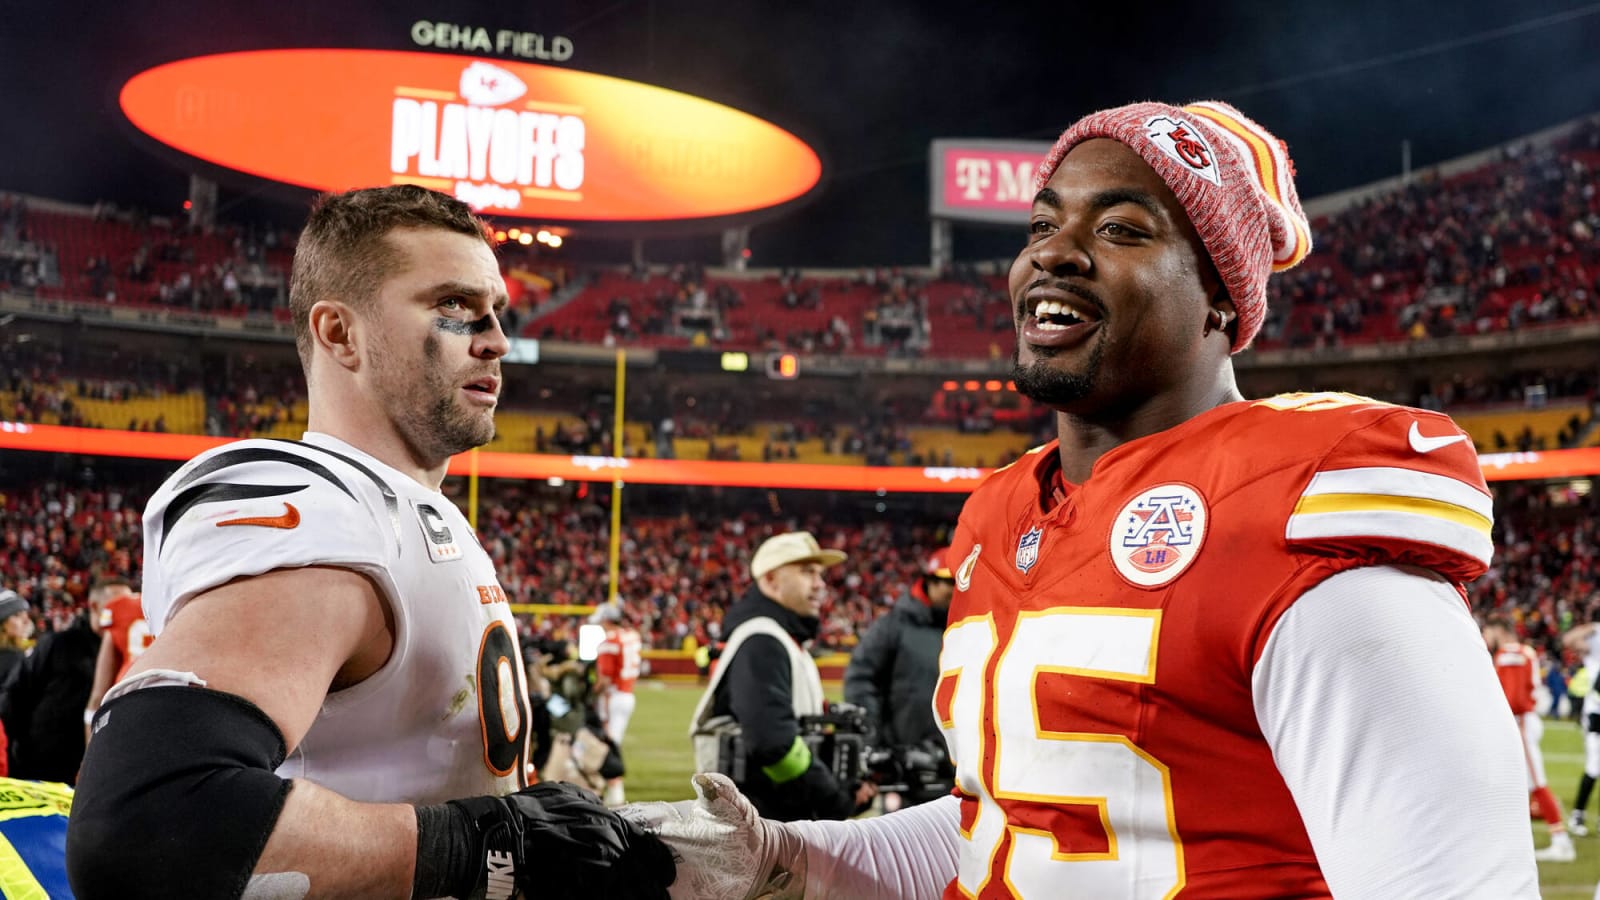 Chris Jones’ $1.25 million sack sparks wild reactions from Chiefs teammates